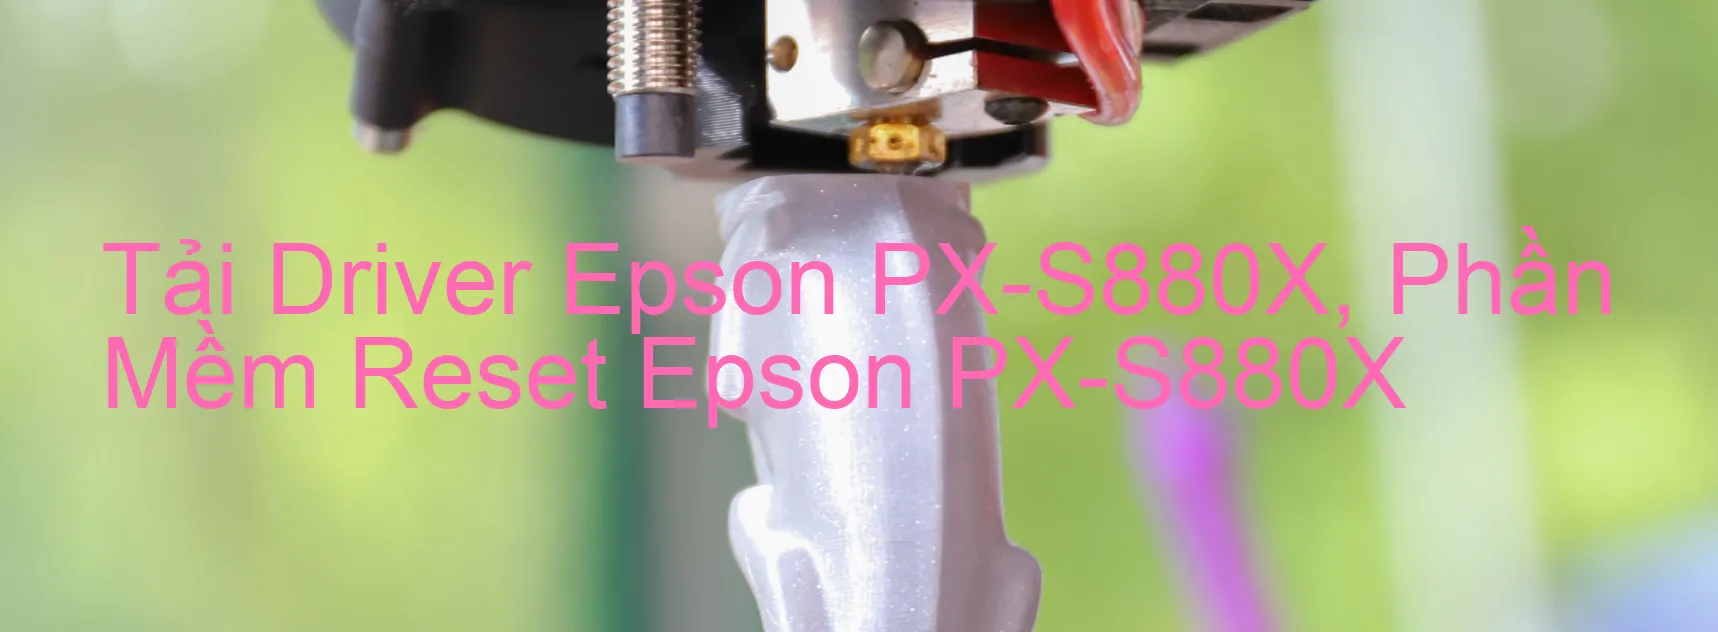 Driver Epson PX-S880X, Phần Mềm Reset Epson PX-S880X